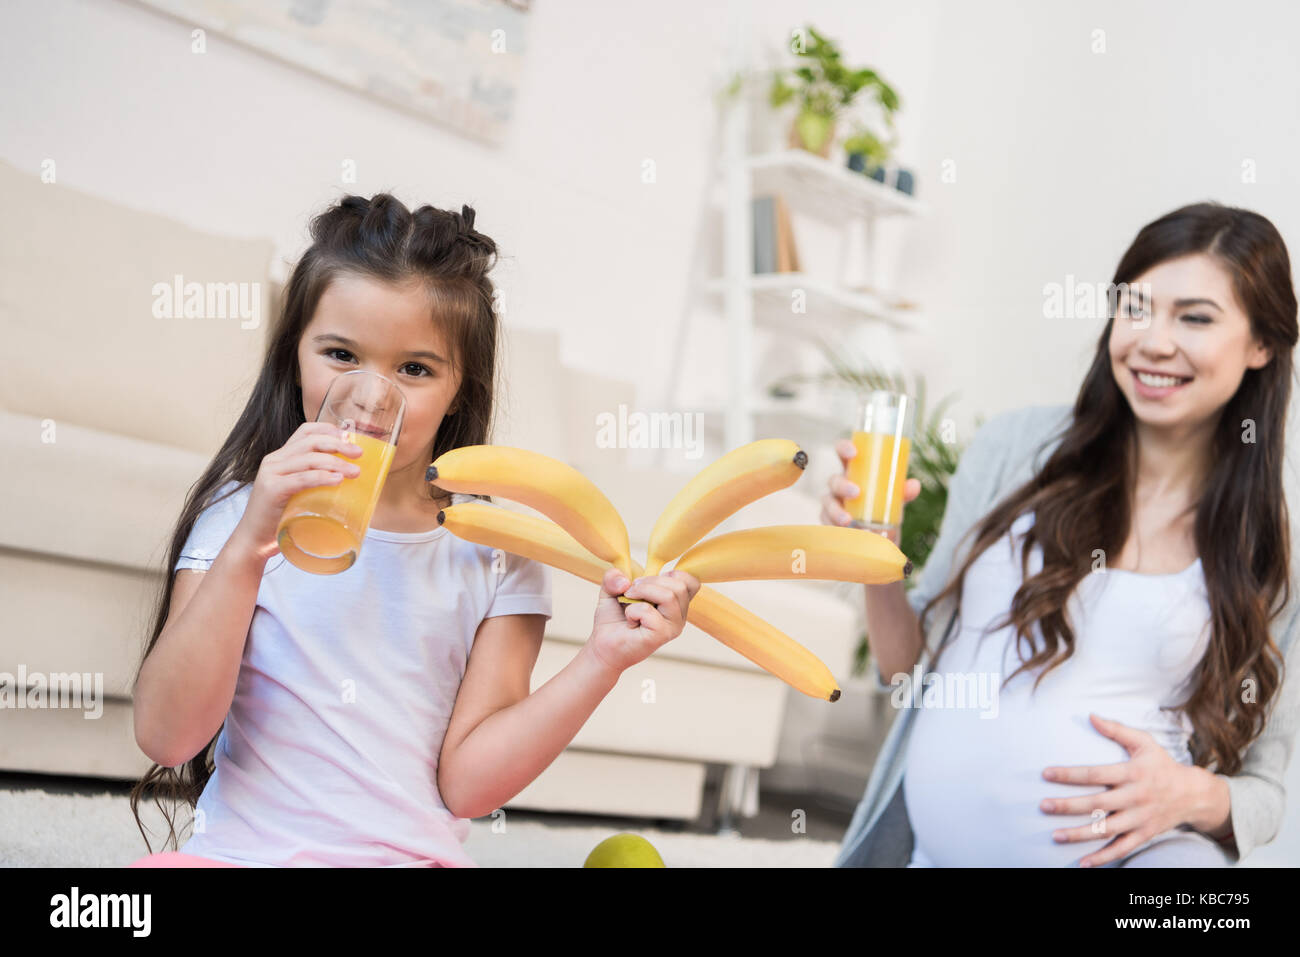 Girl holding bananas and drinking juice Stock Photo